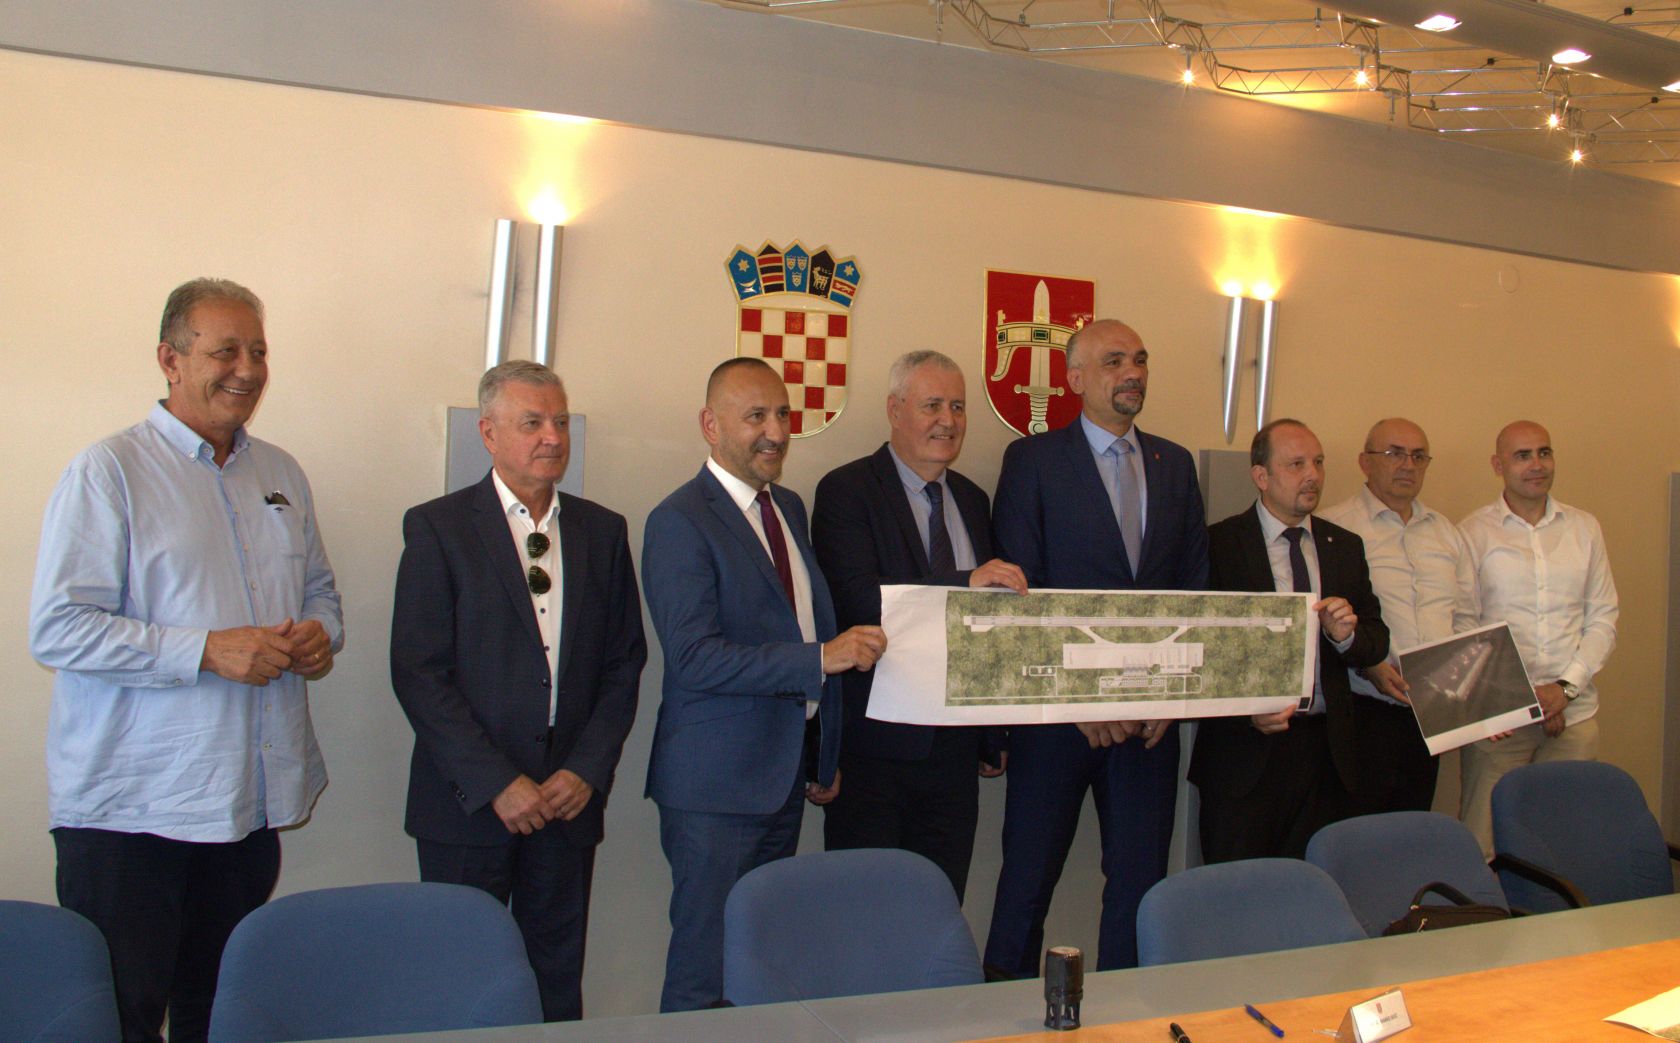 The establishment of the company Zračna Luka Srce Dalmacije (Heart of Dalmatia Airport) 